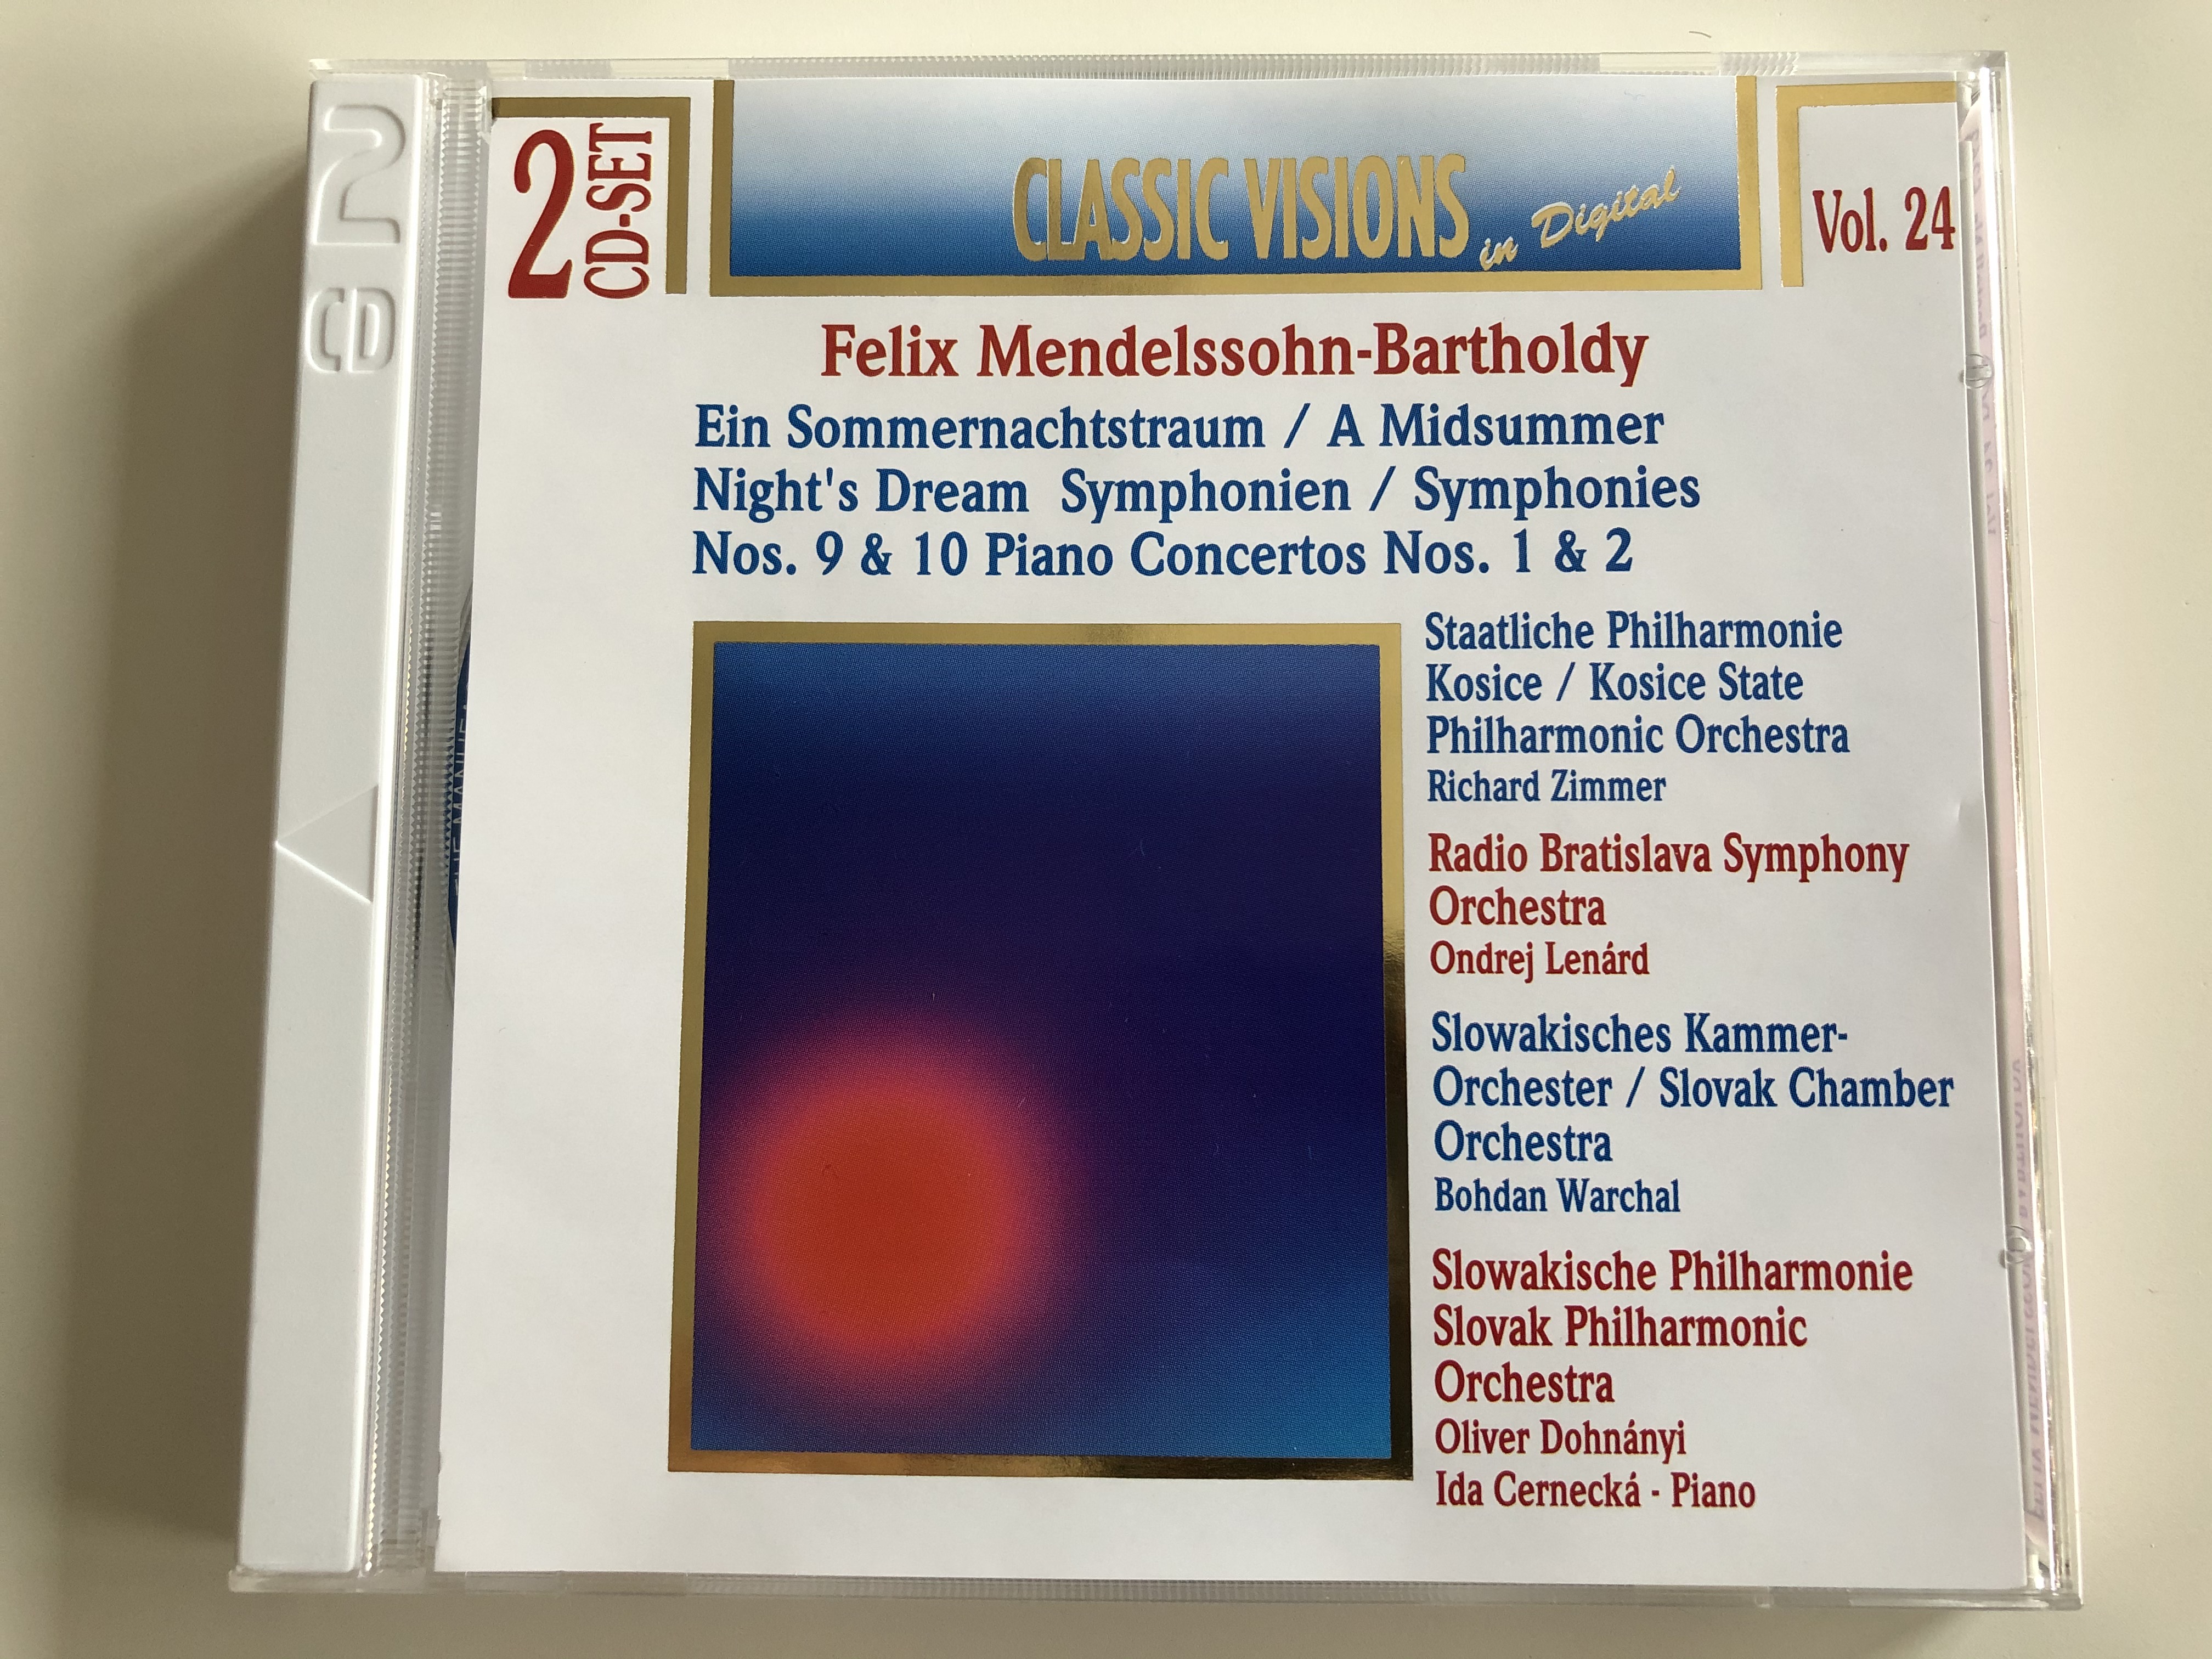 classic-visions-in-digital-vol.-24-felix-mendelssohn-bartholdy-ein-sommernachtstraum-a-midsummer-night-s-dream-symphonien-symphonies-nos.-9-10-piano-concertos-nos.-1-2-classic-visio-1-.jpg